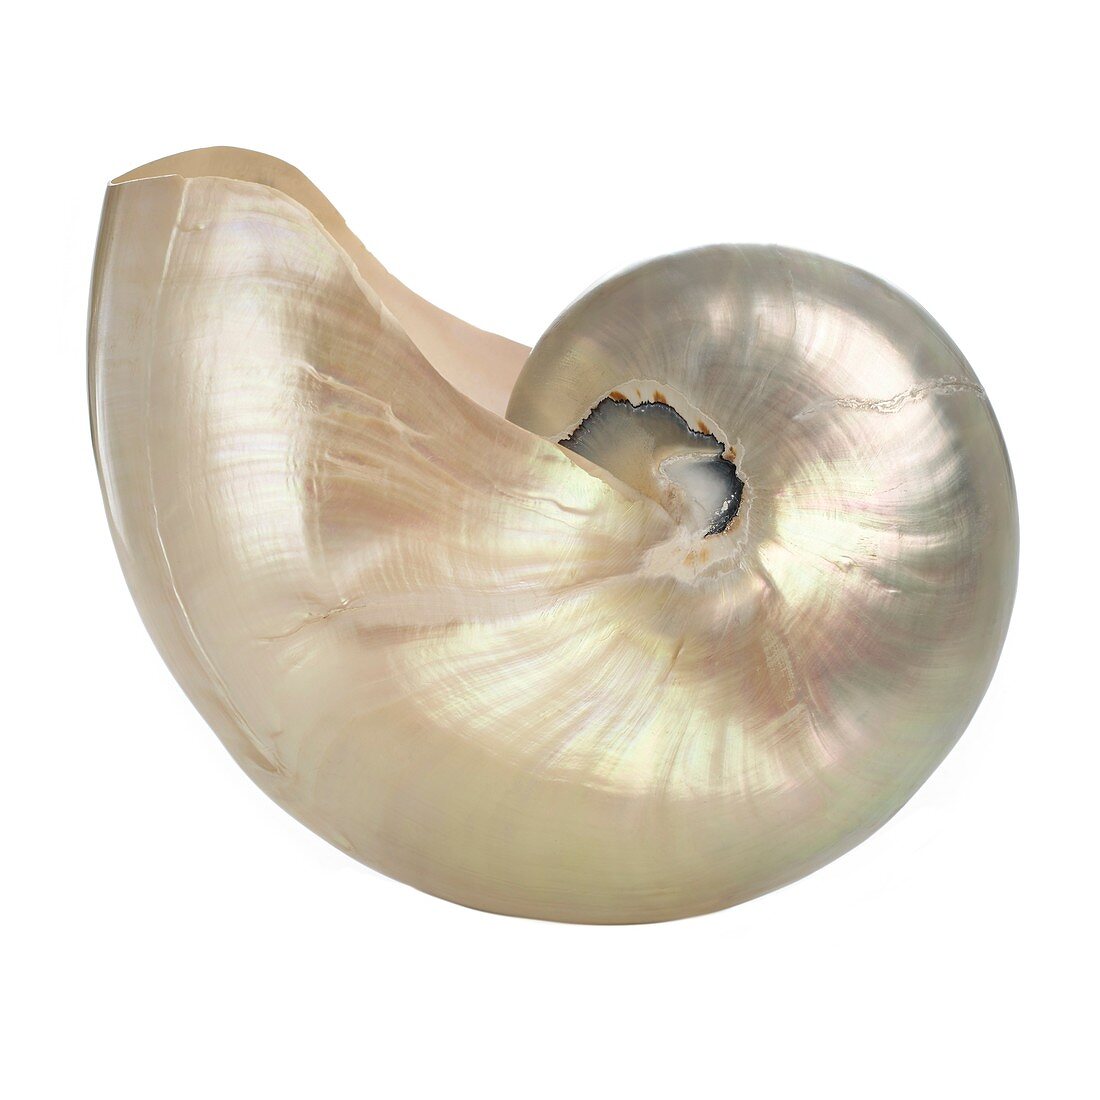 Polished chambered nautilus shell